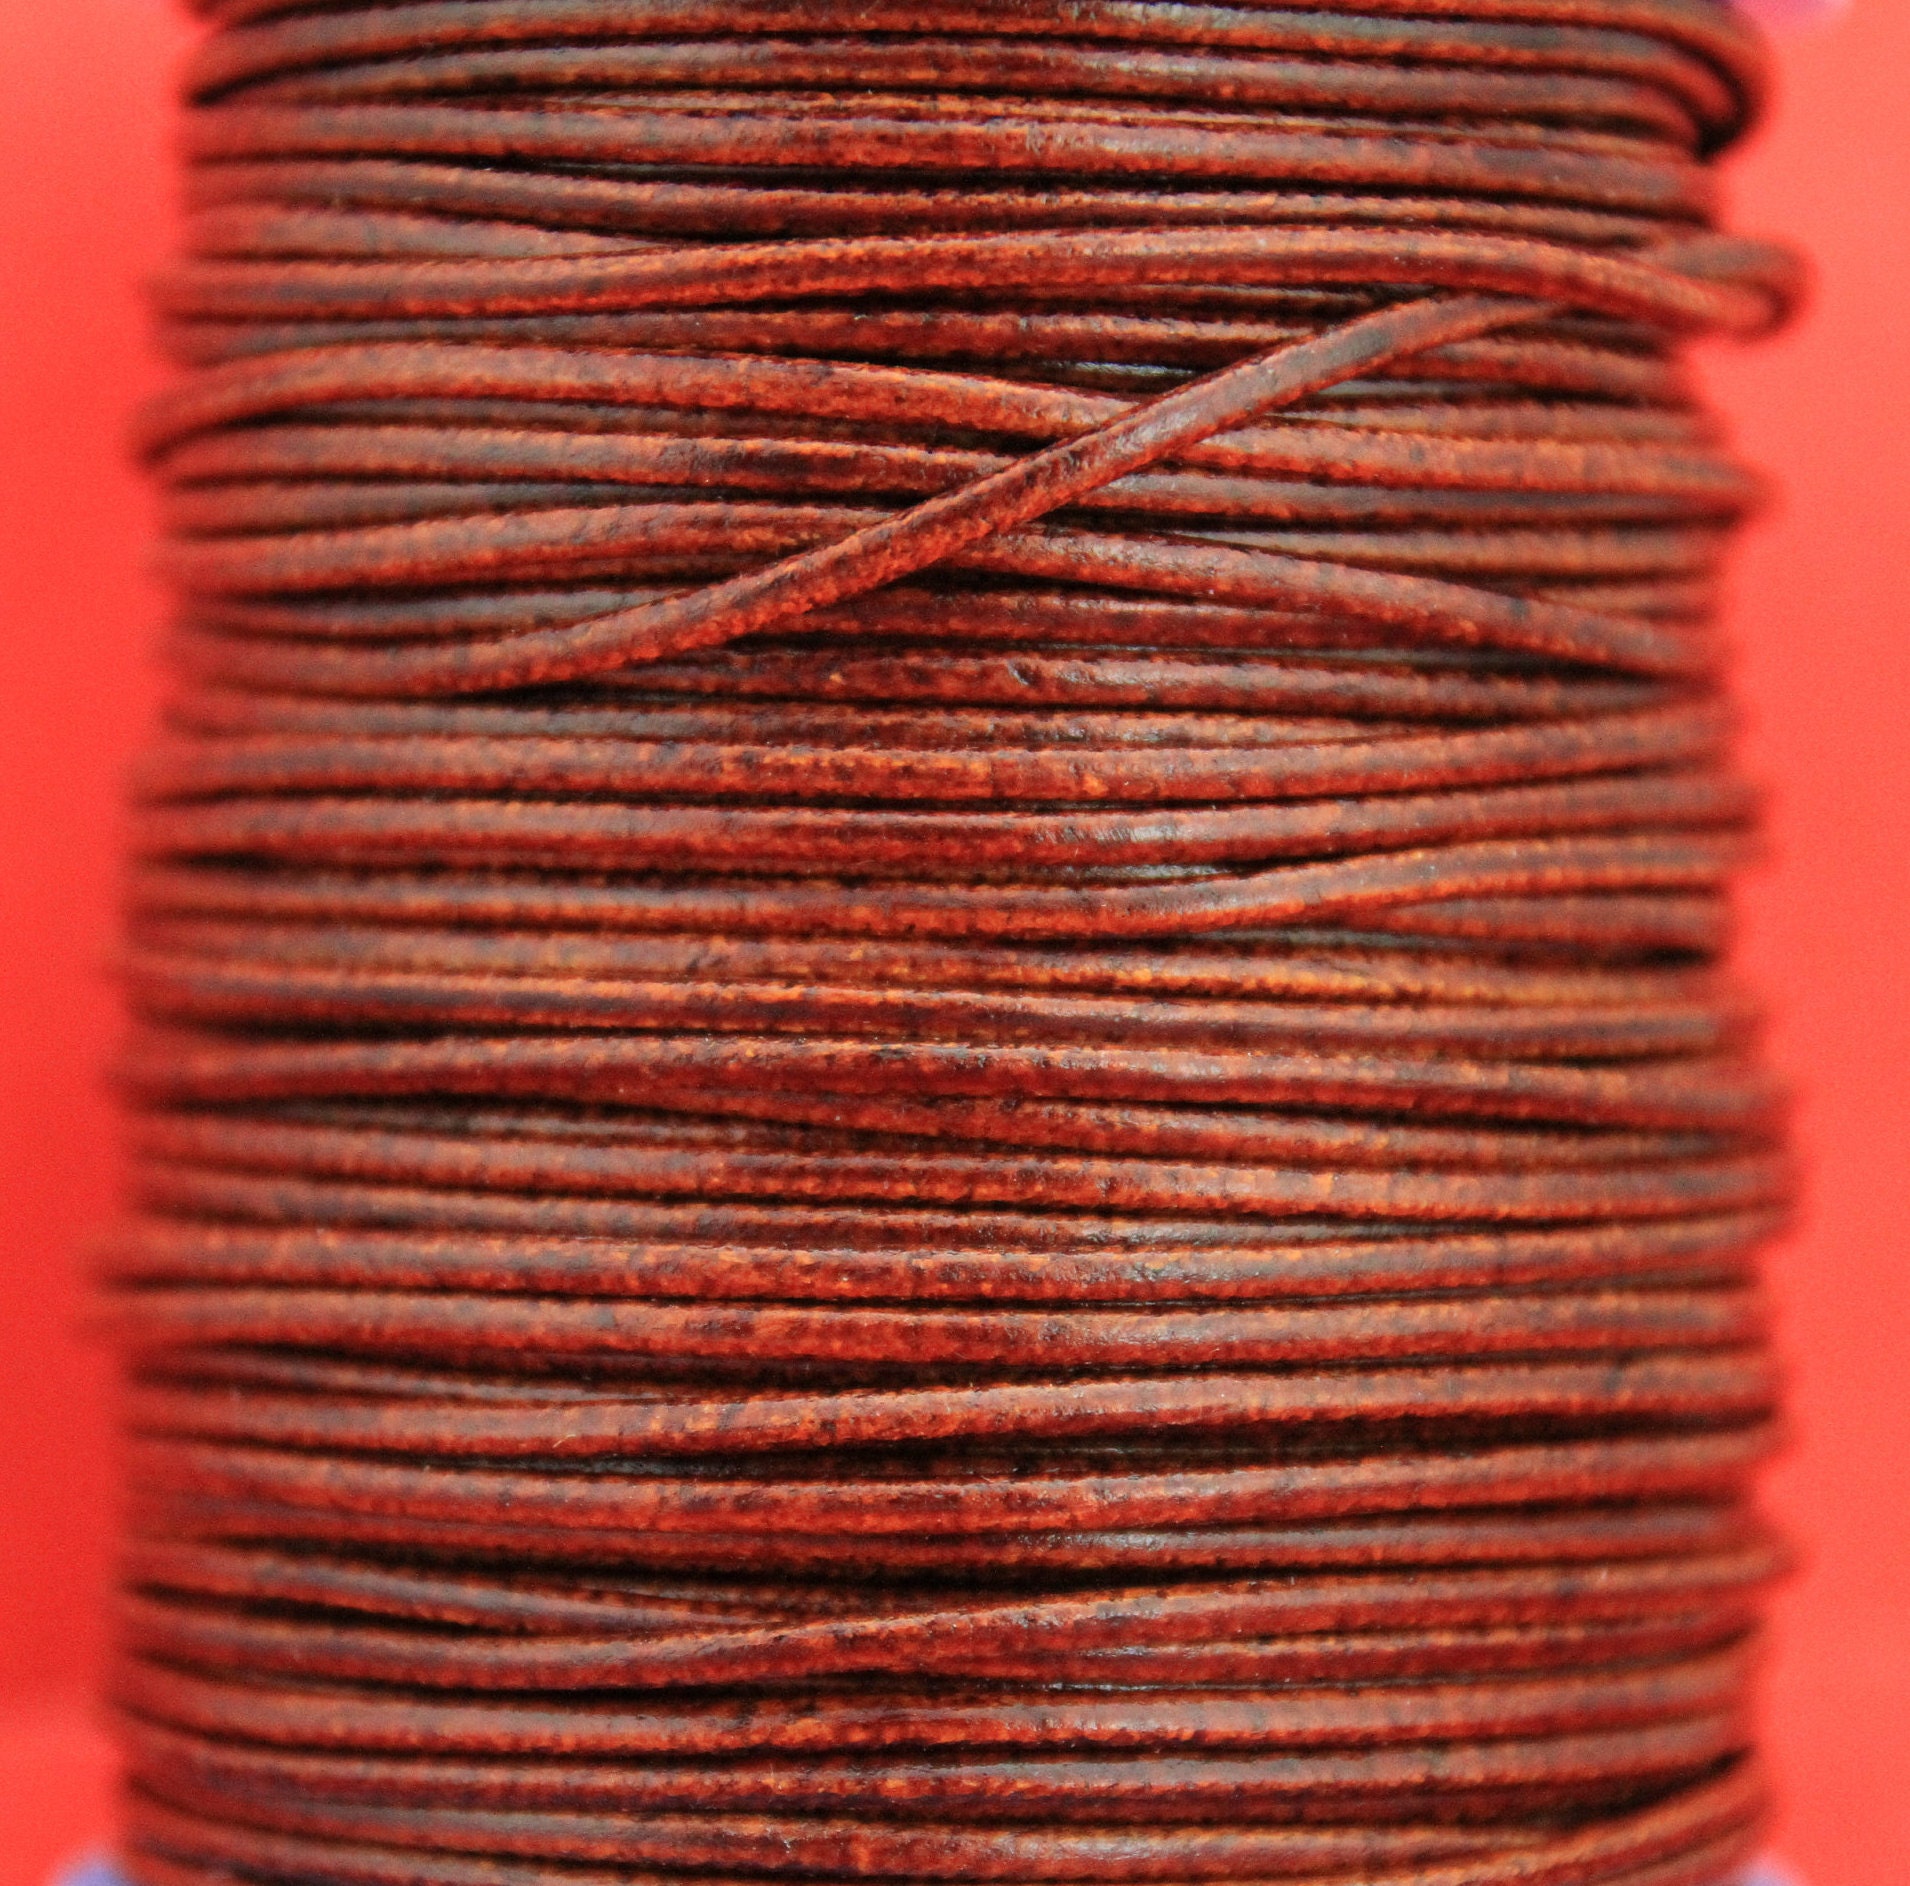 Greek Leather Cord - Tobacco 2.5mm